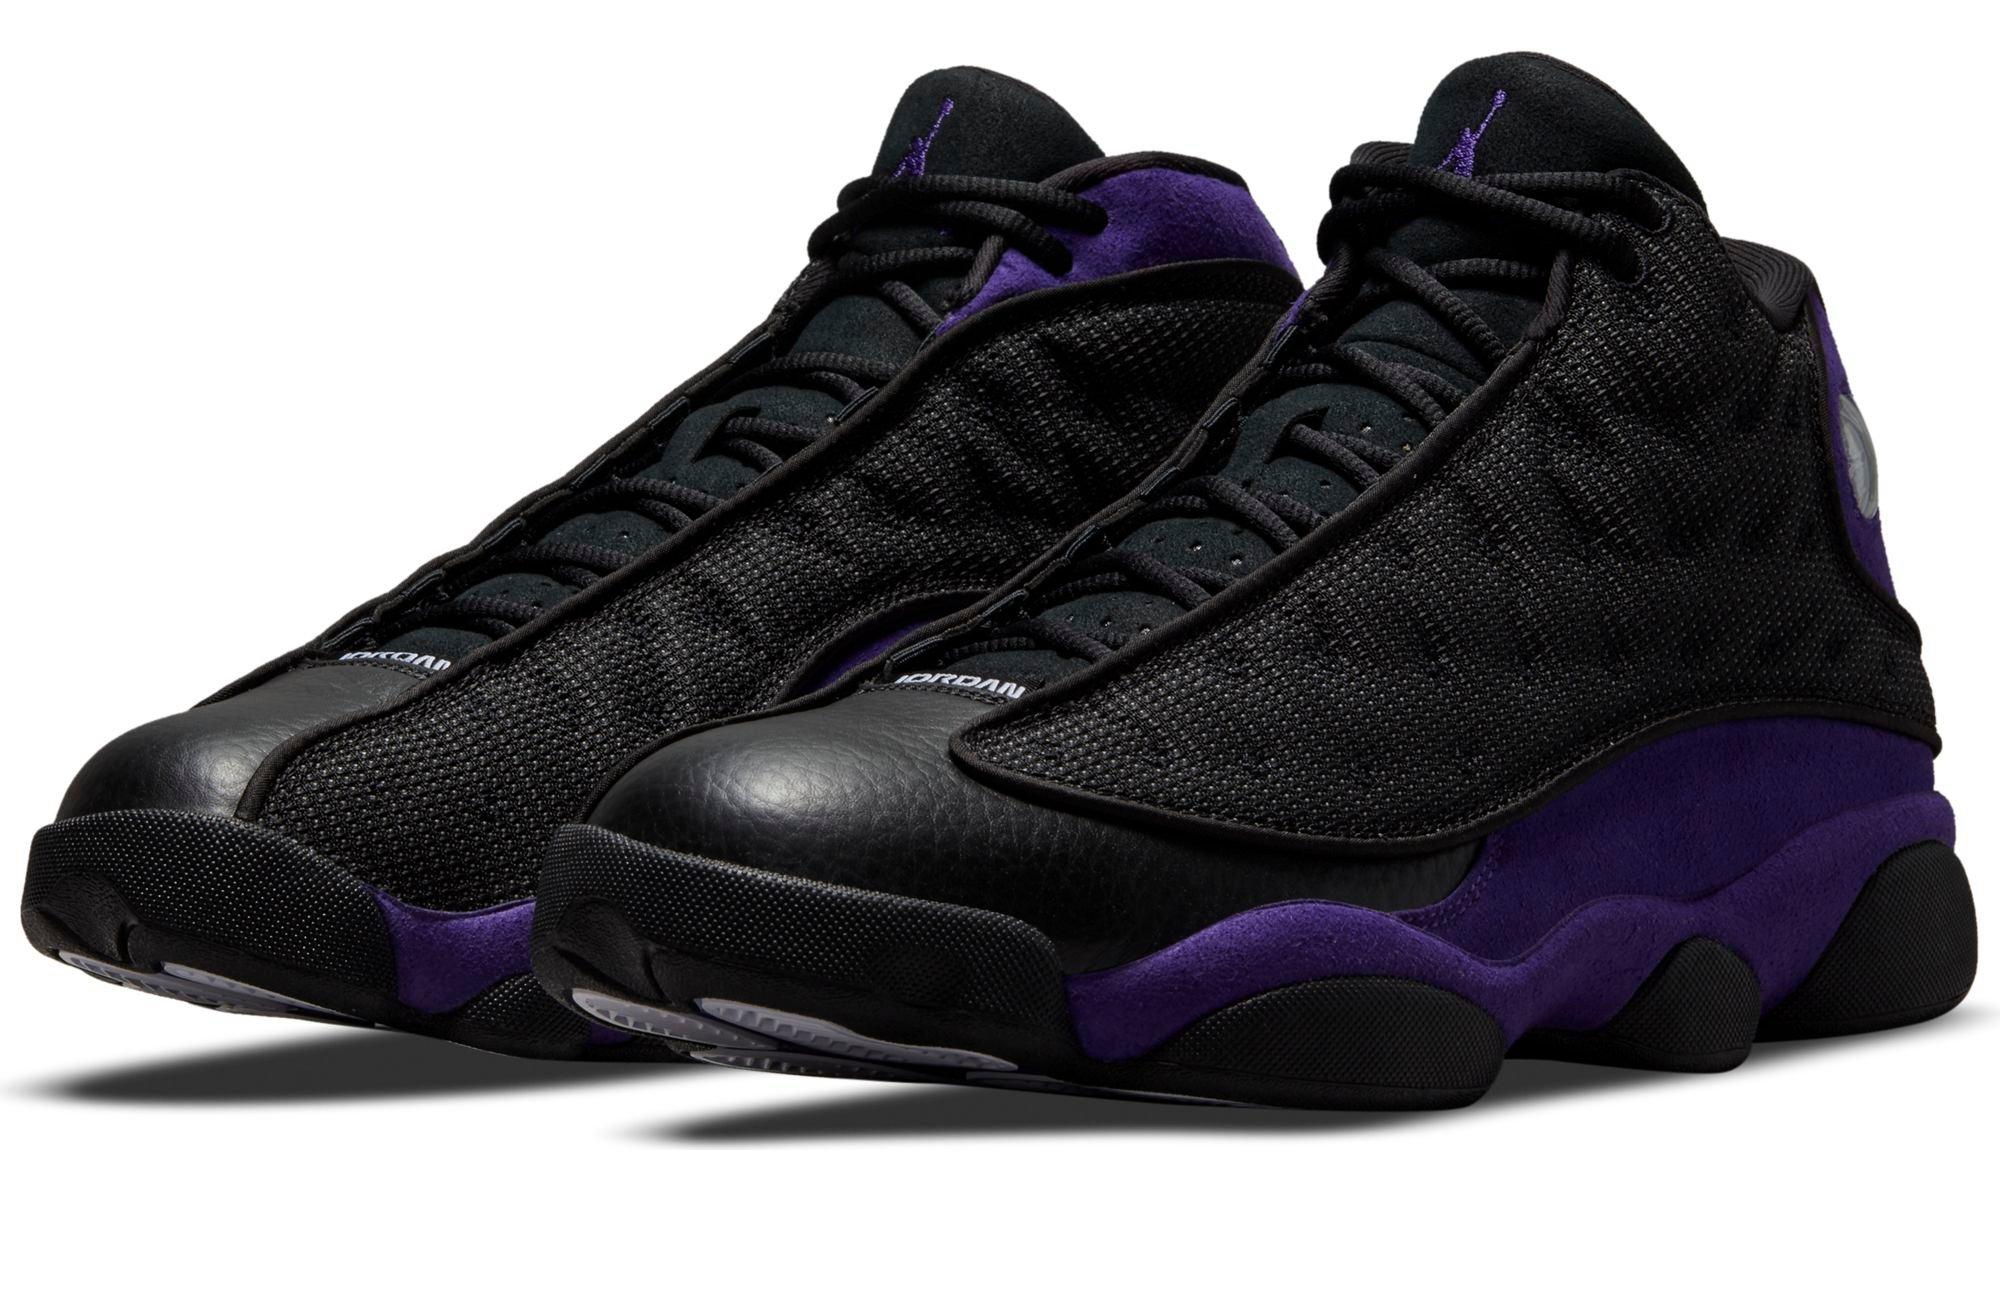 Sneakers Release – Air Jordan 1 High OG “Court Purple